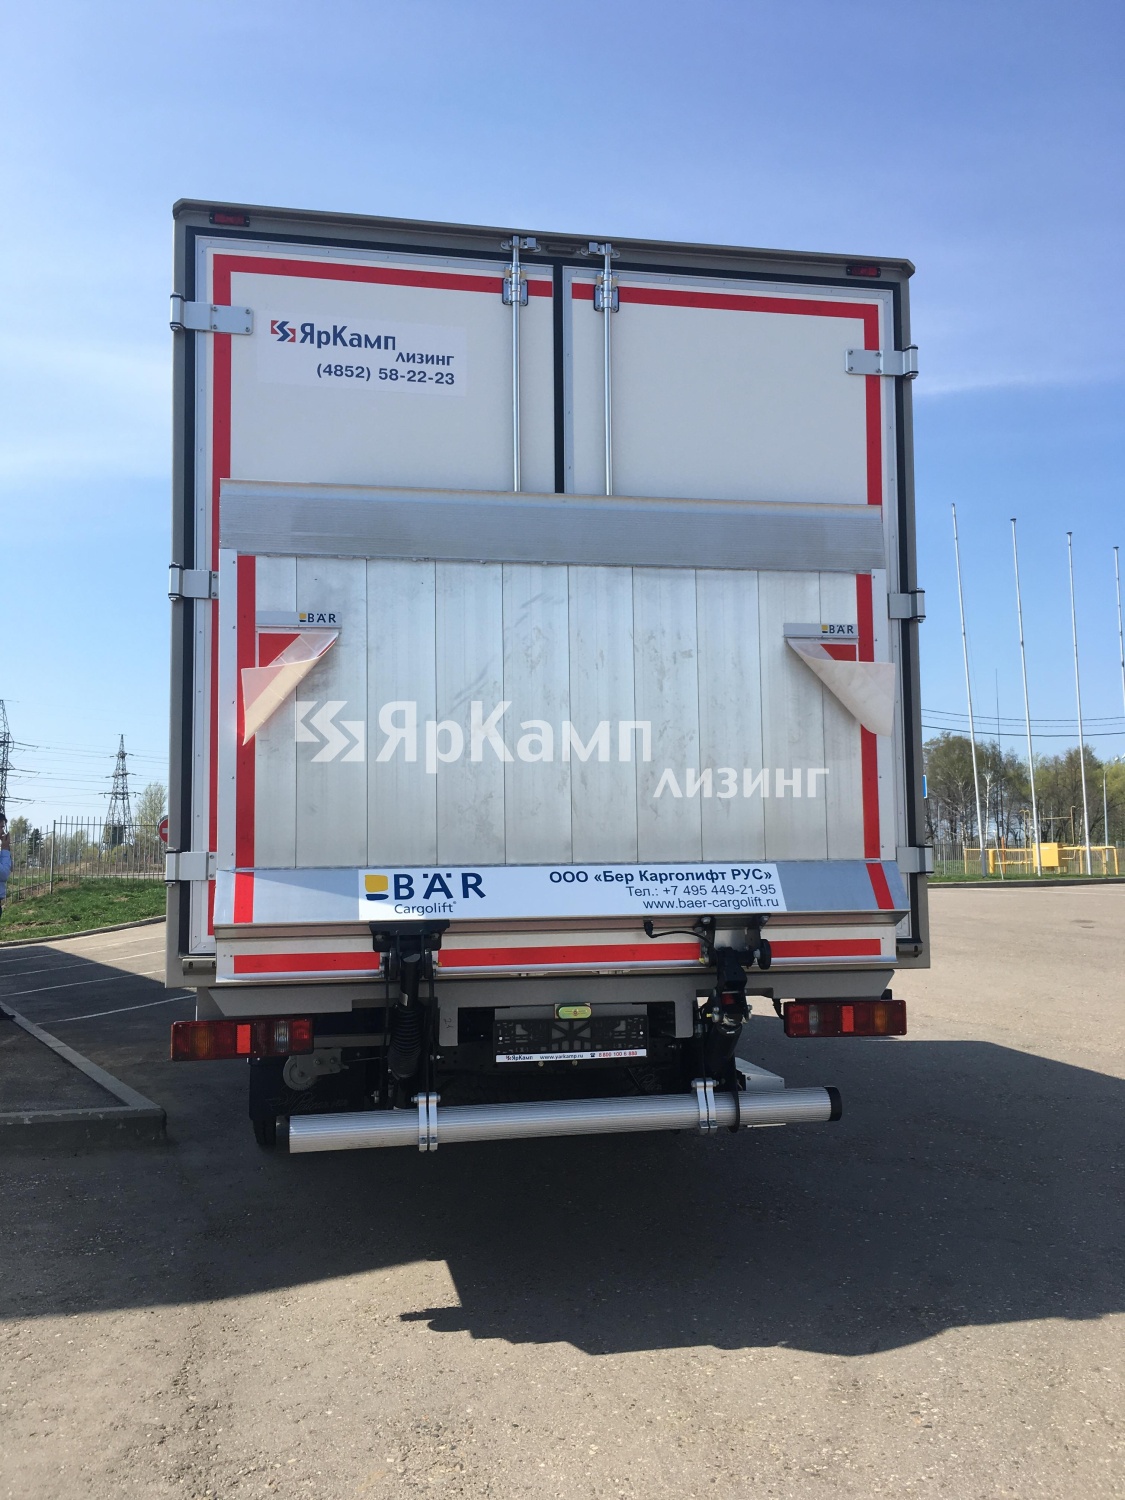 "ЯрКамп-Лизинг" осуществил поставку на условиях лизинга автофургона-рефрижератора 3010GA на базе ГАЗ-С41RB3